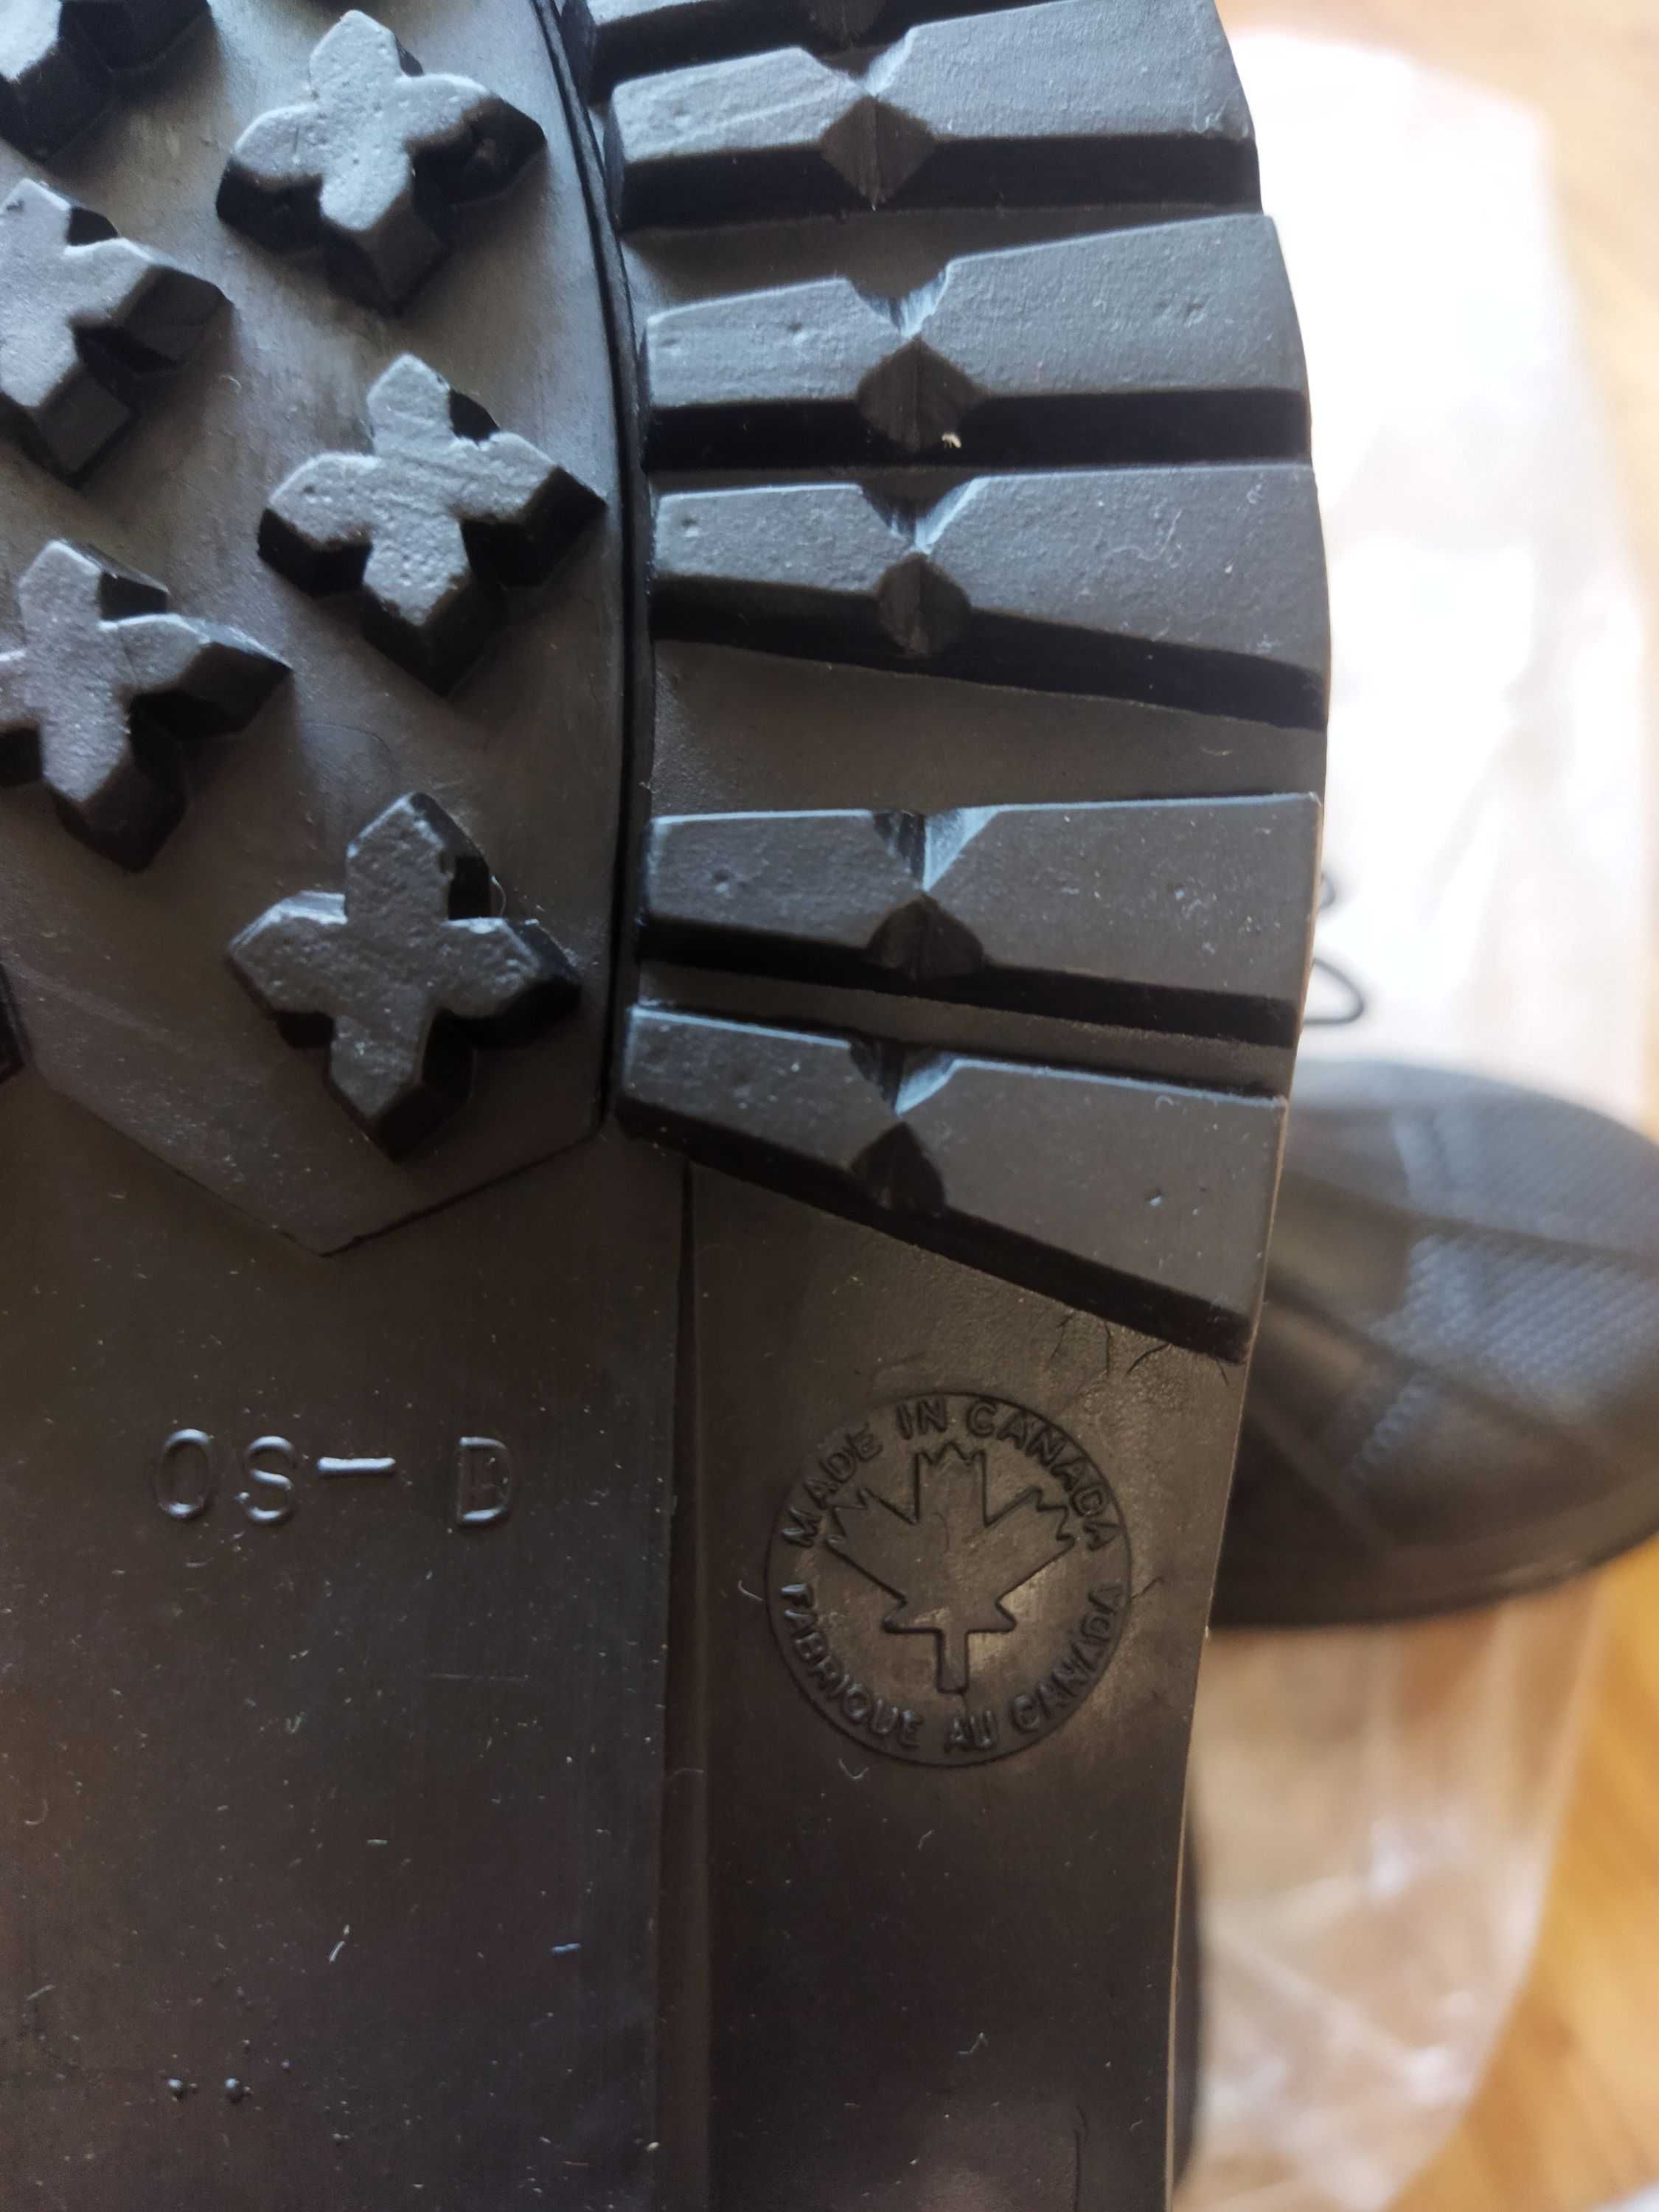 Сапоги-ботинки Baffin (Канада),кожа,до -45,оригинал,новые,р-р 42,43